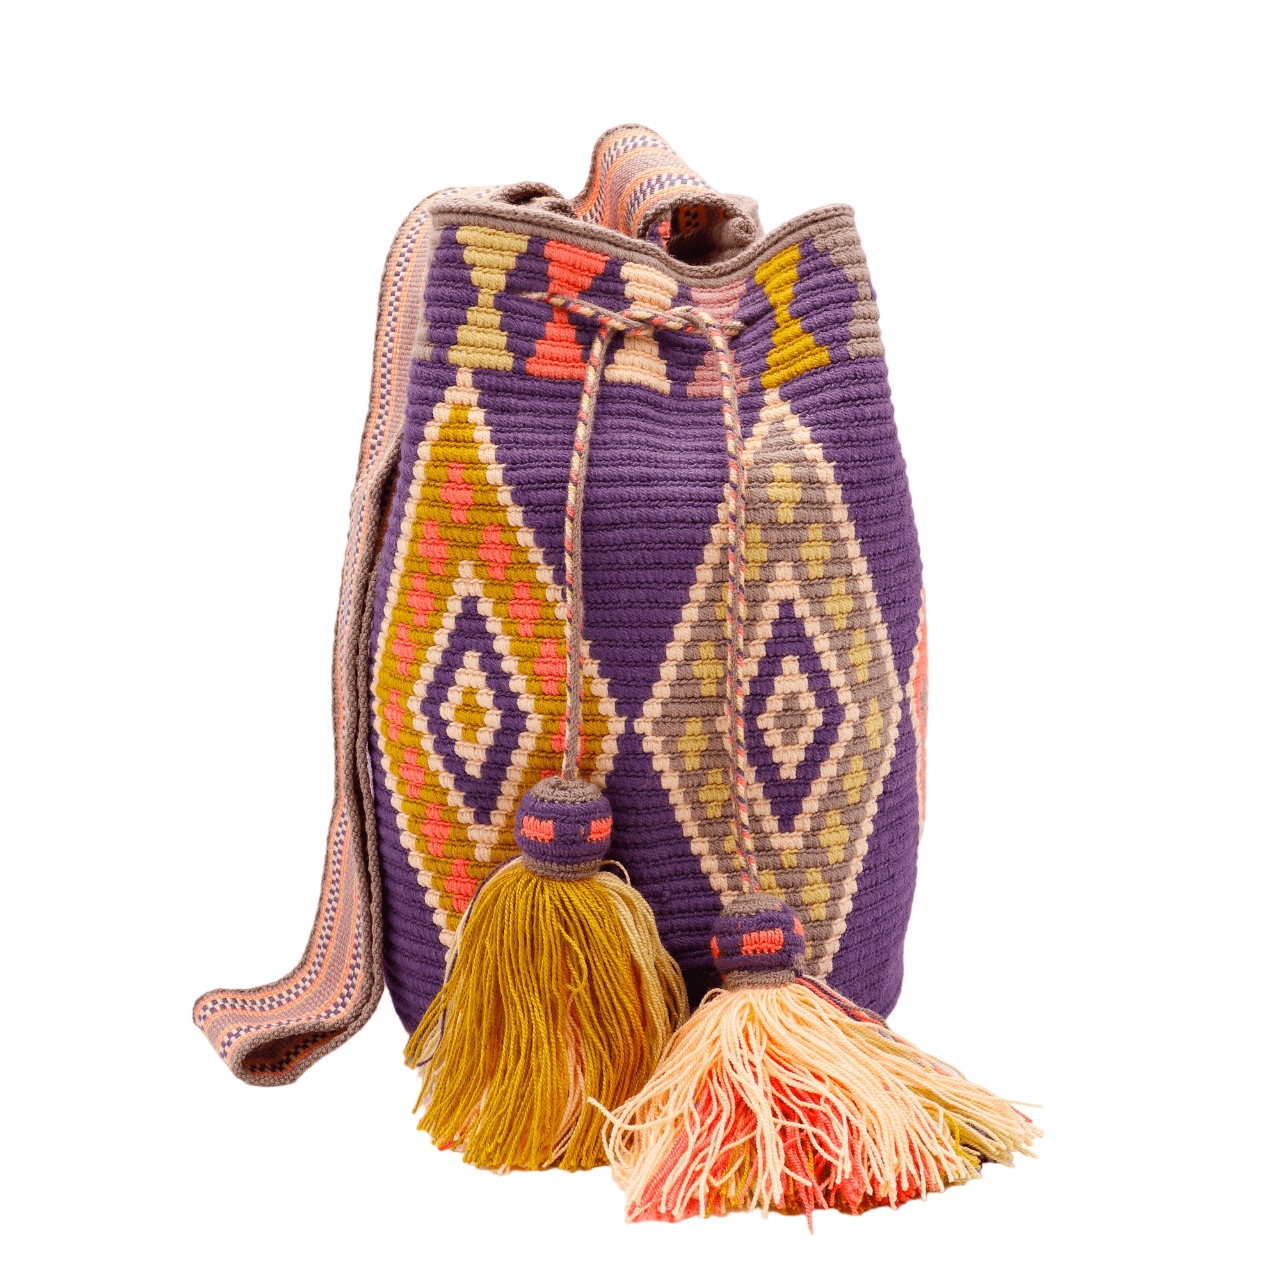 Itzel Wayuu Bag - Origin Colombia